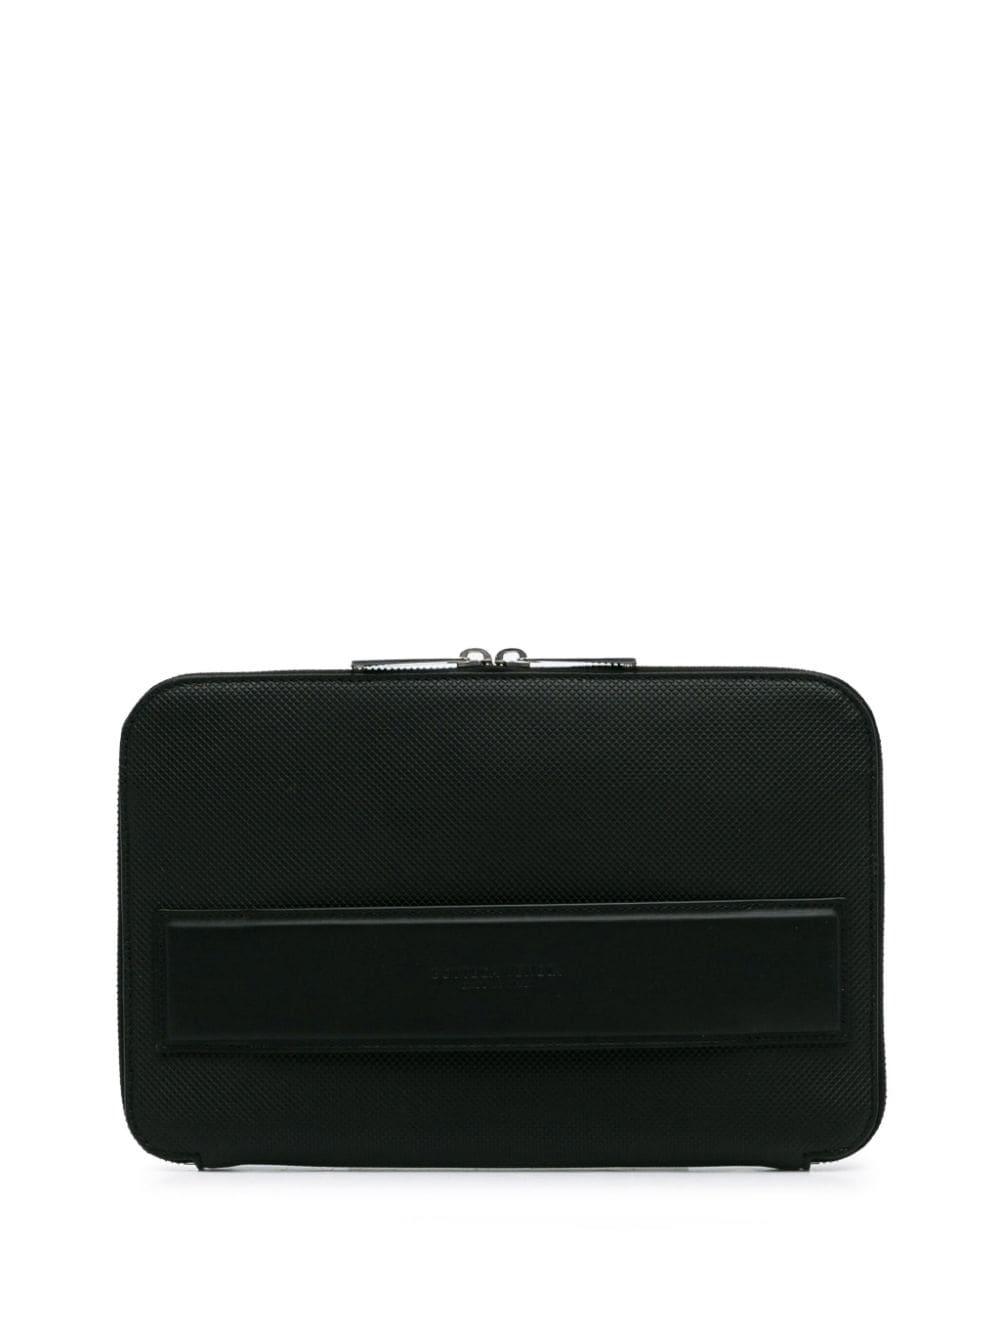 Bottega Veneta Pre-Owned 21th Century Leather Document Holder clutch bag - Nero